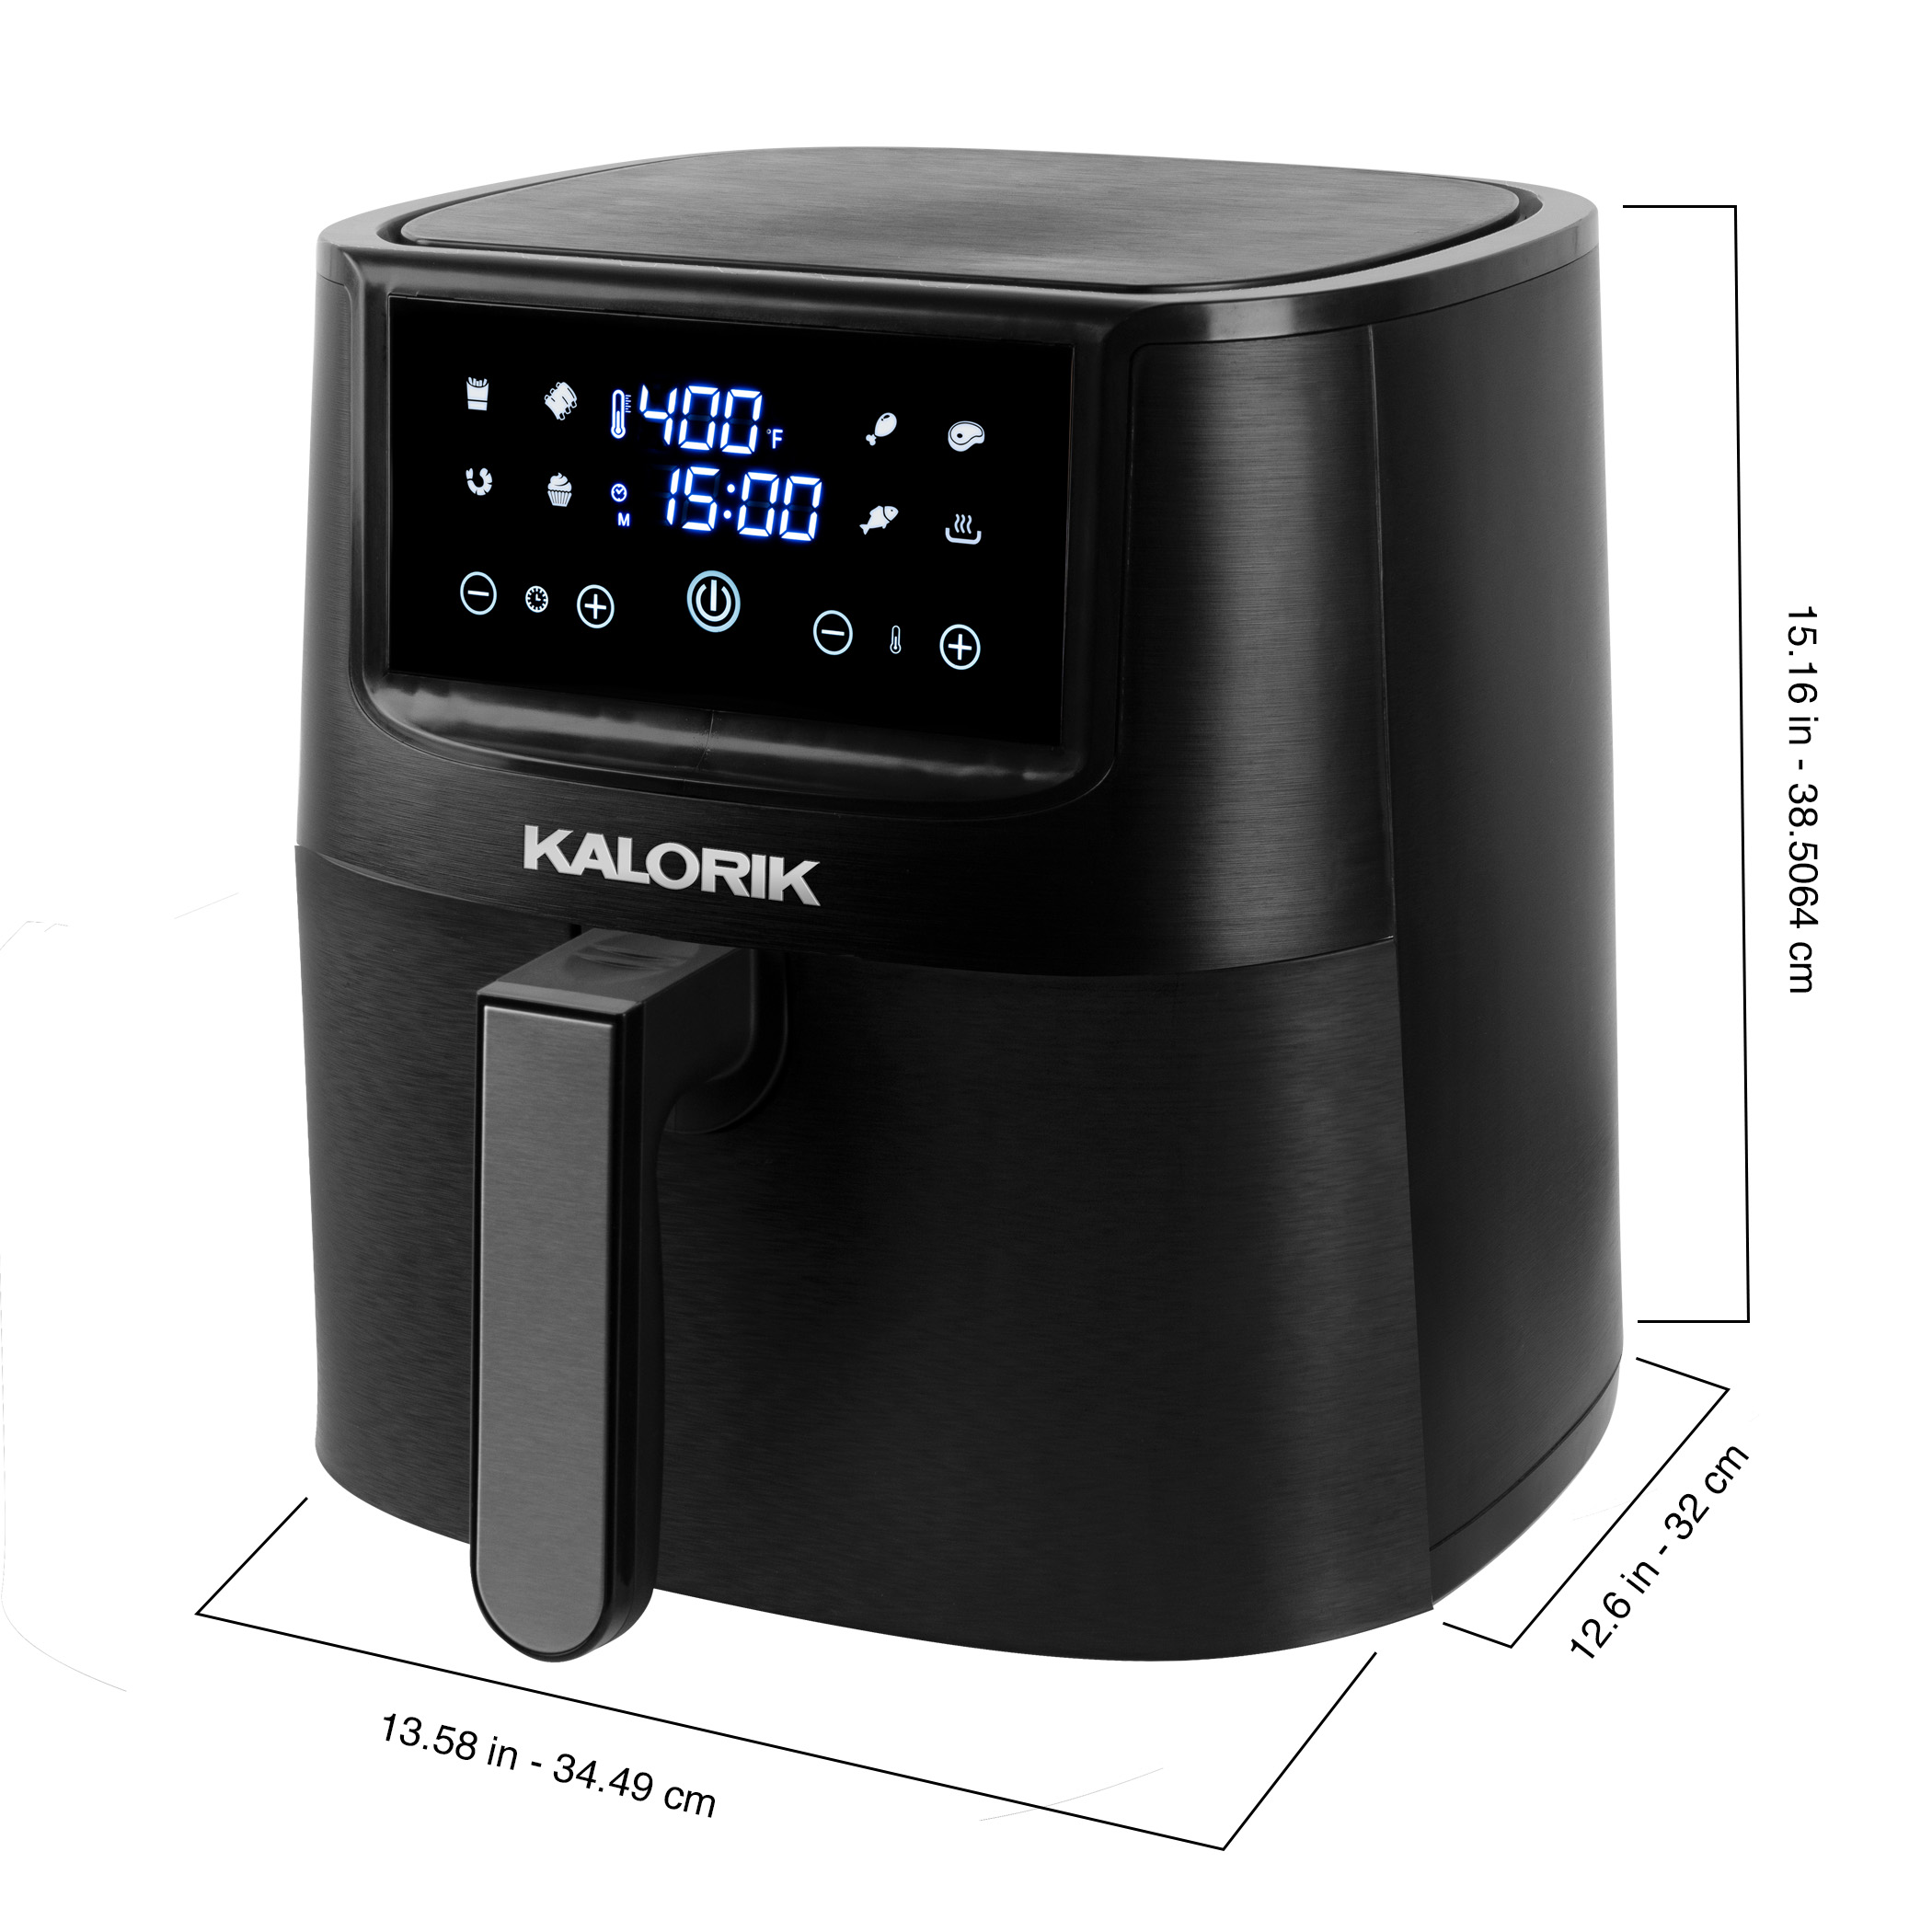 Kalorik® 8 Qt Digital Touchscreen Air Fryer with Trivet, Black FT 51503 BK - image 7 of 10